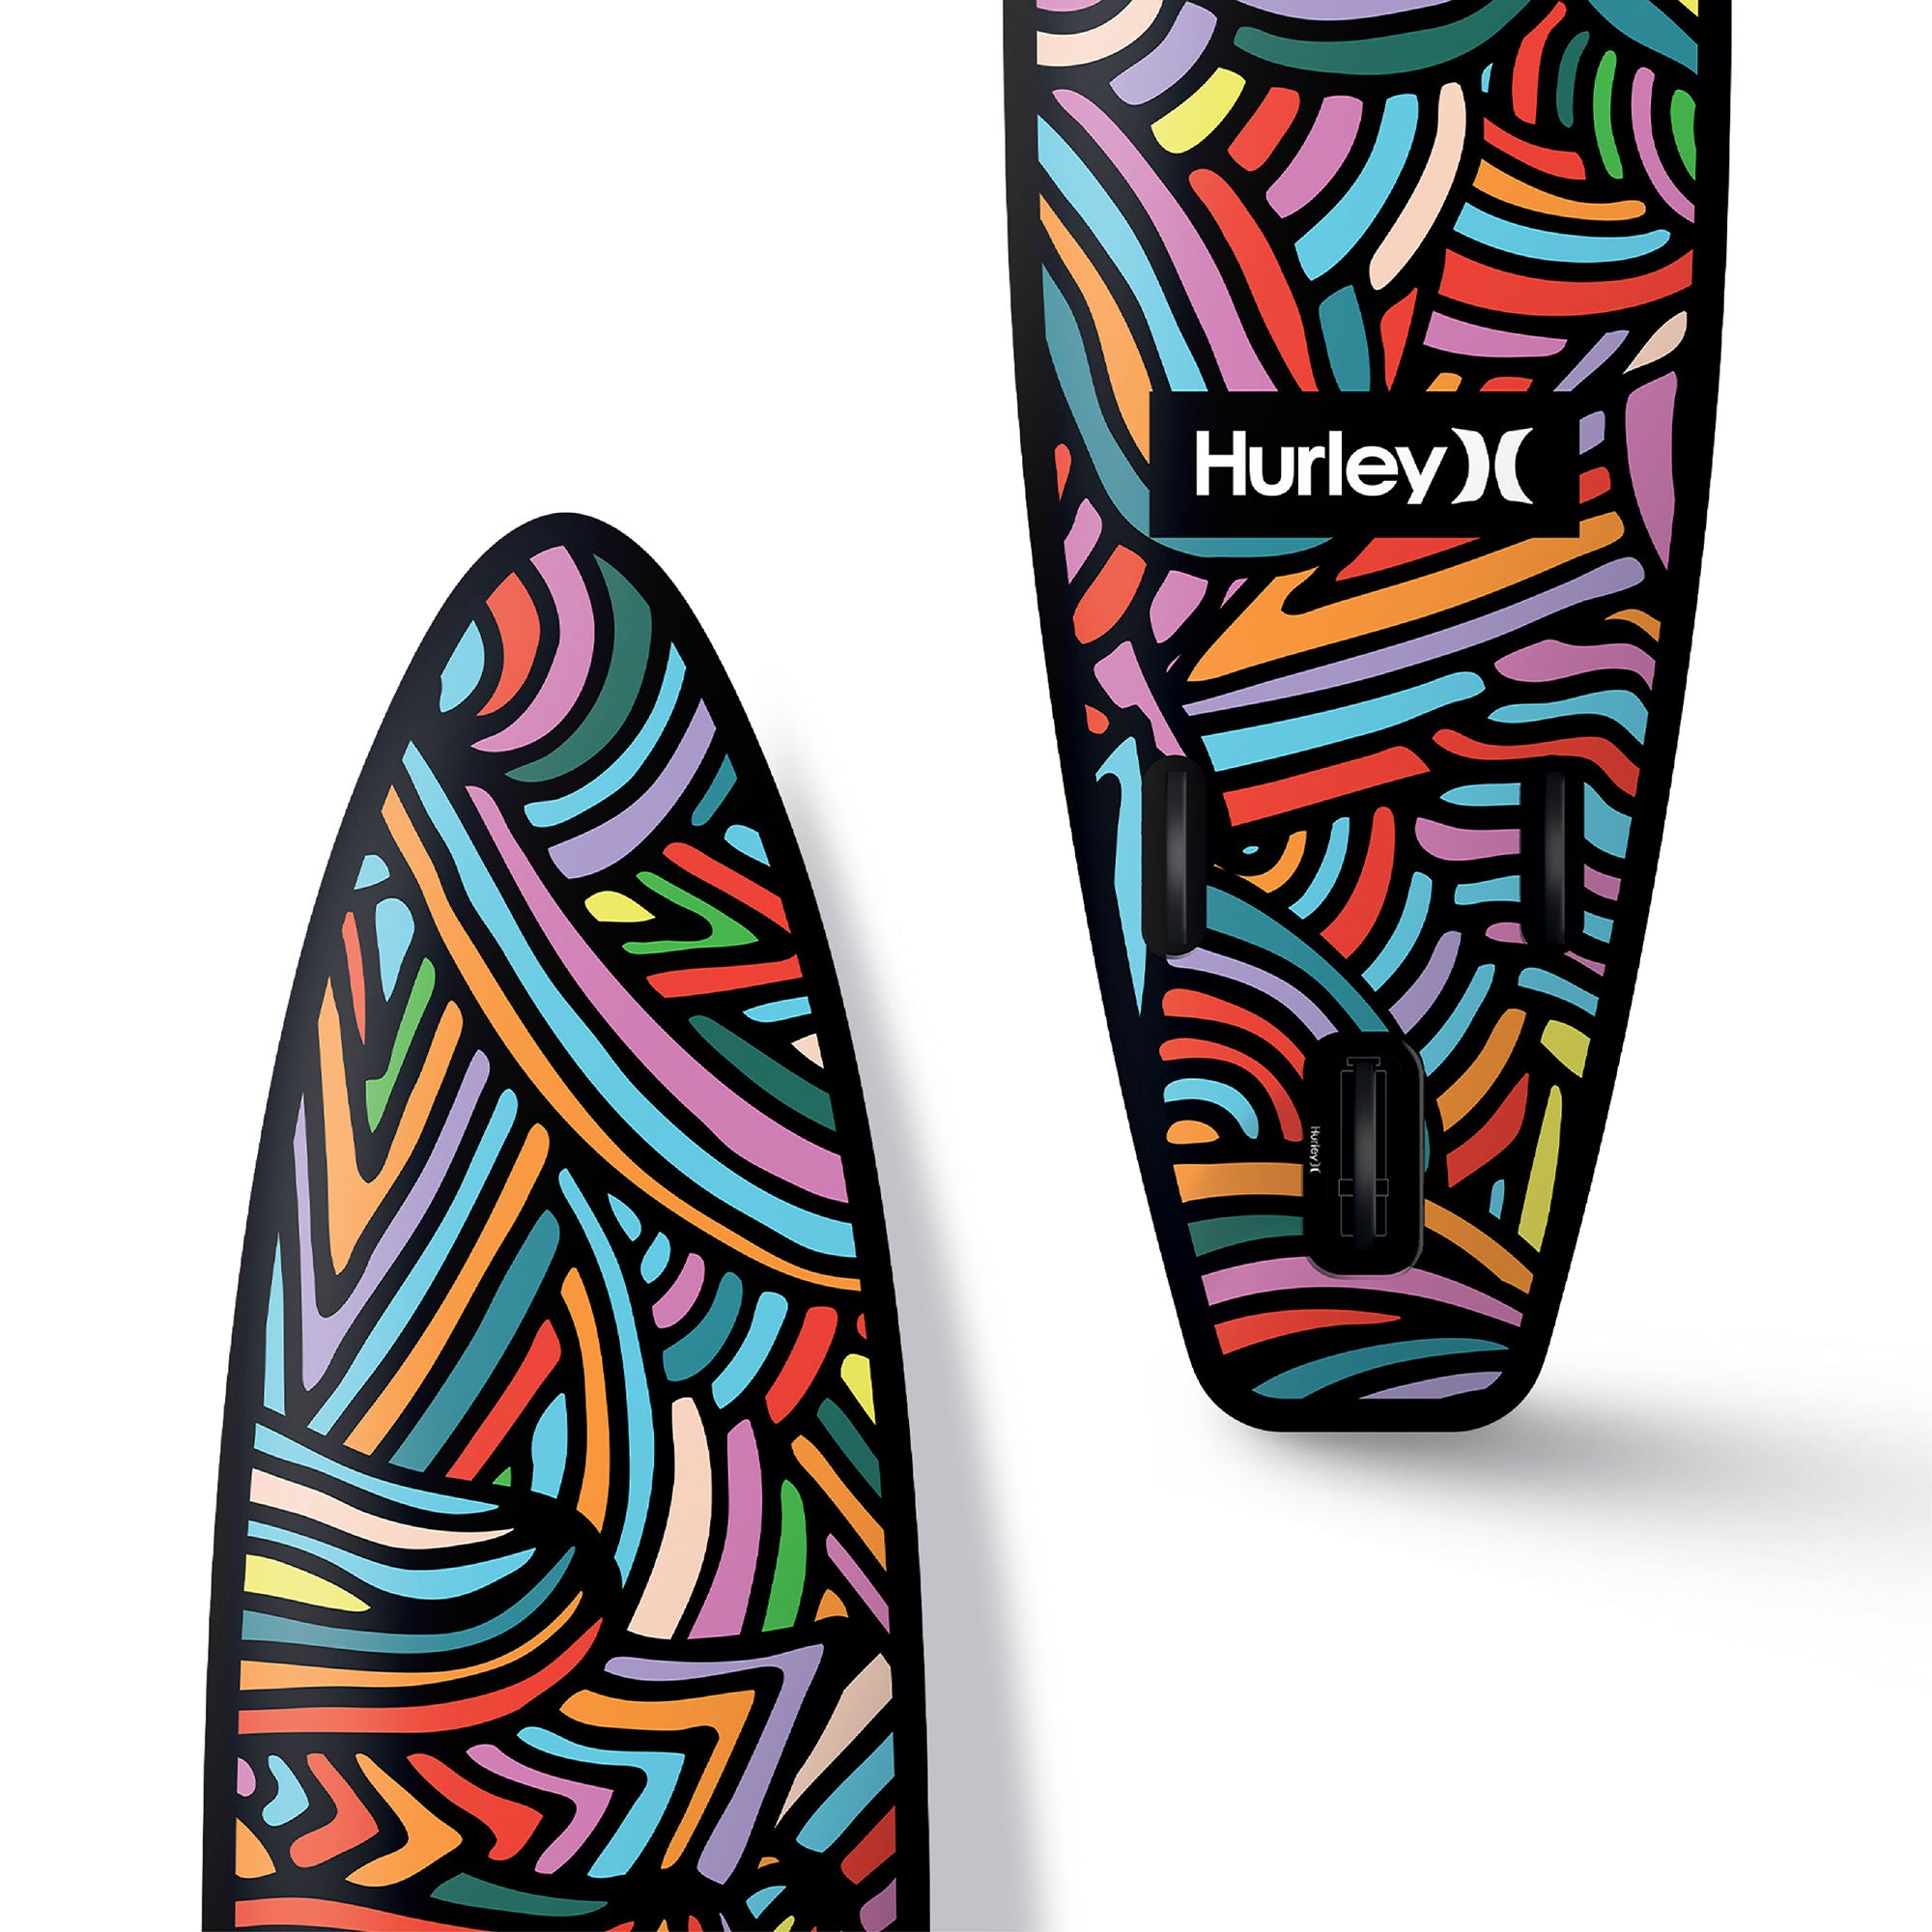 Hurley PhantomTour Color-Wave 10’6” iSUP Set at HeySurf.com